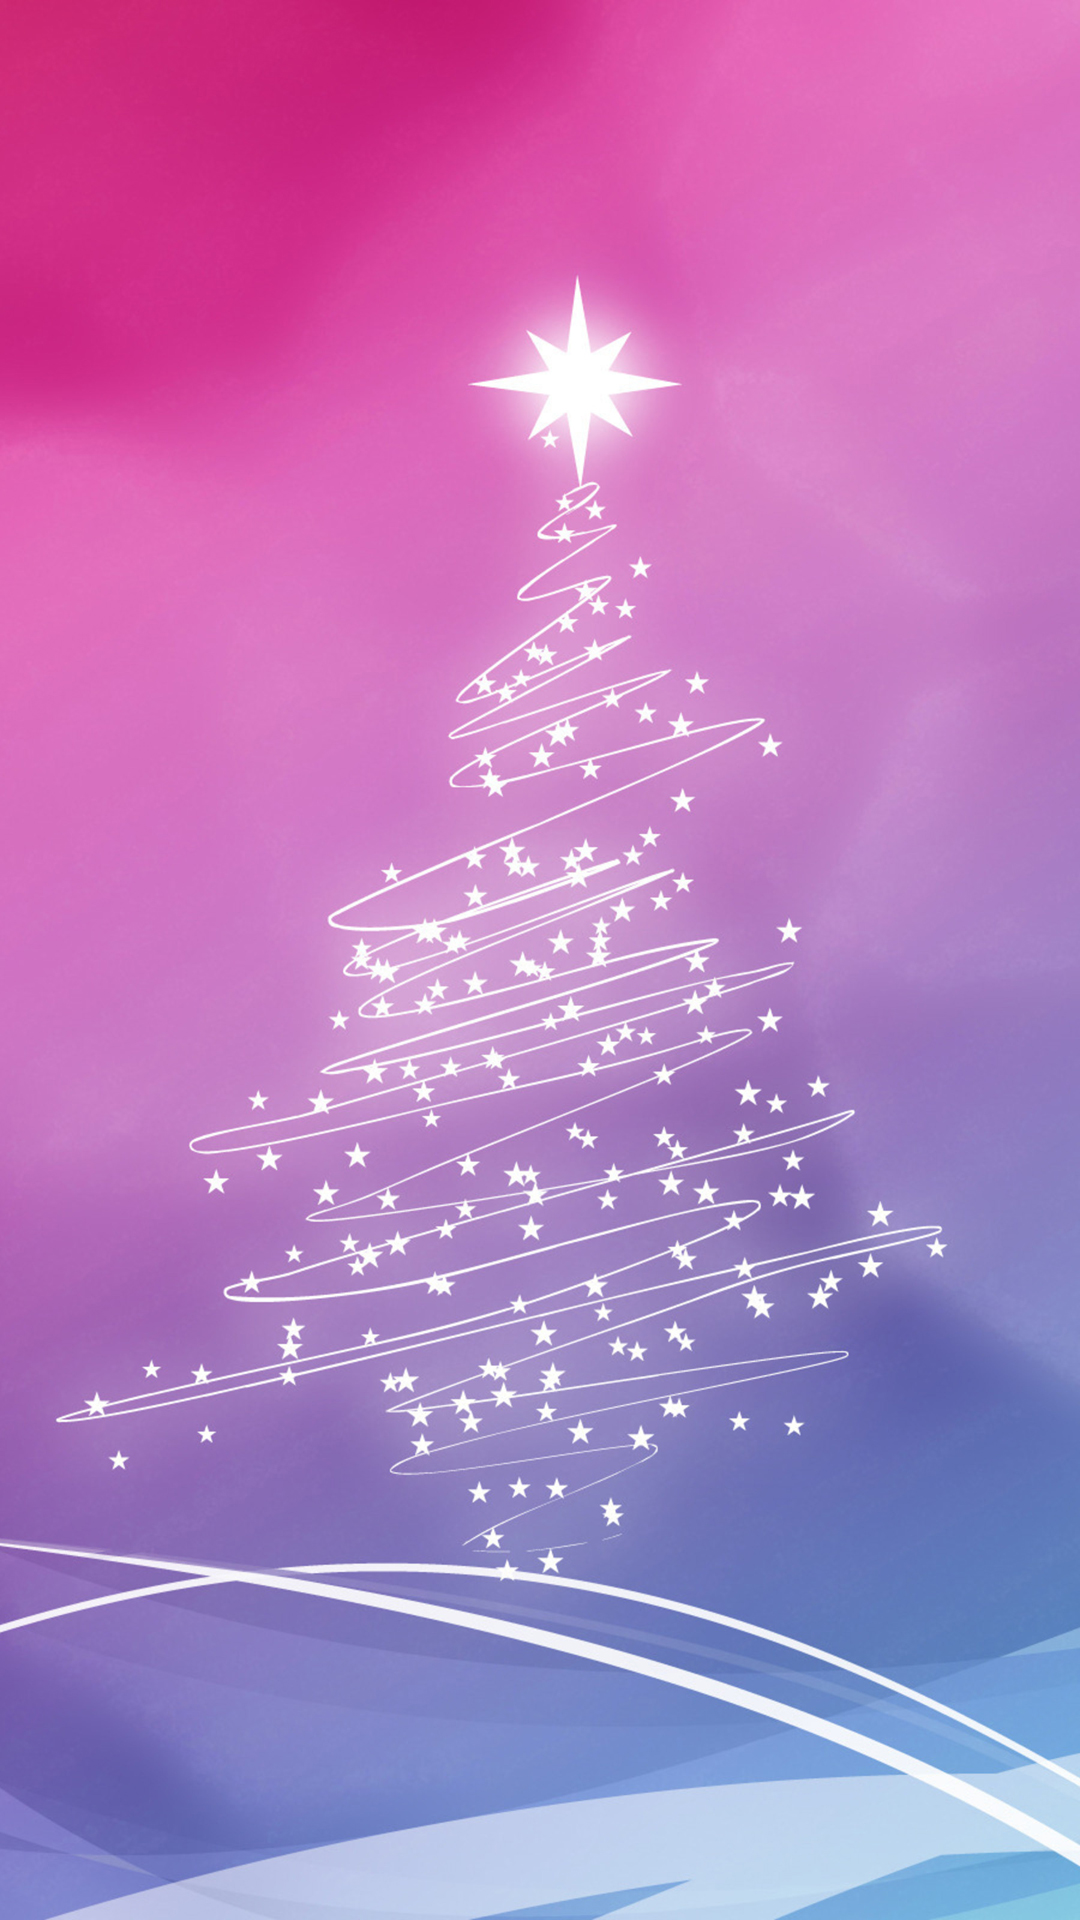 Immagini Natale Per Iphone 6.Christmas Tree Iphone Wallpaper Hd